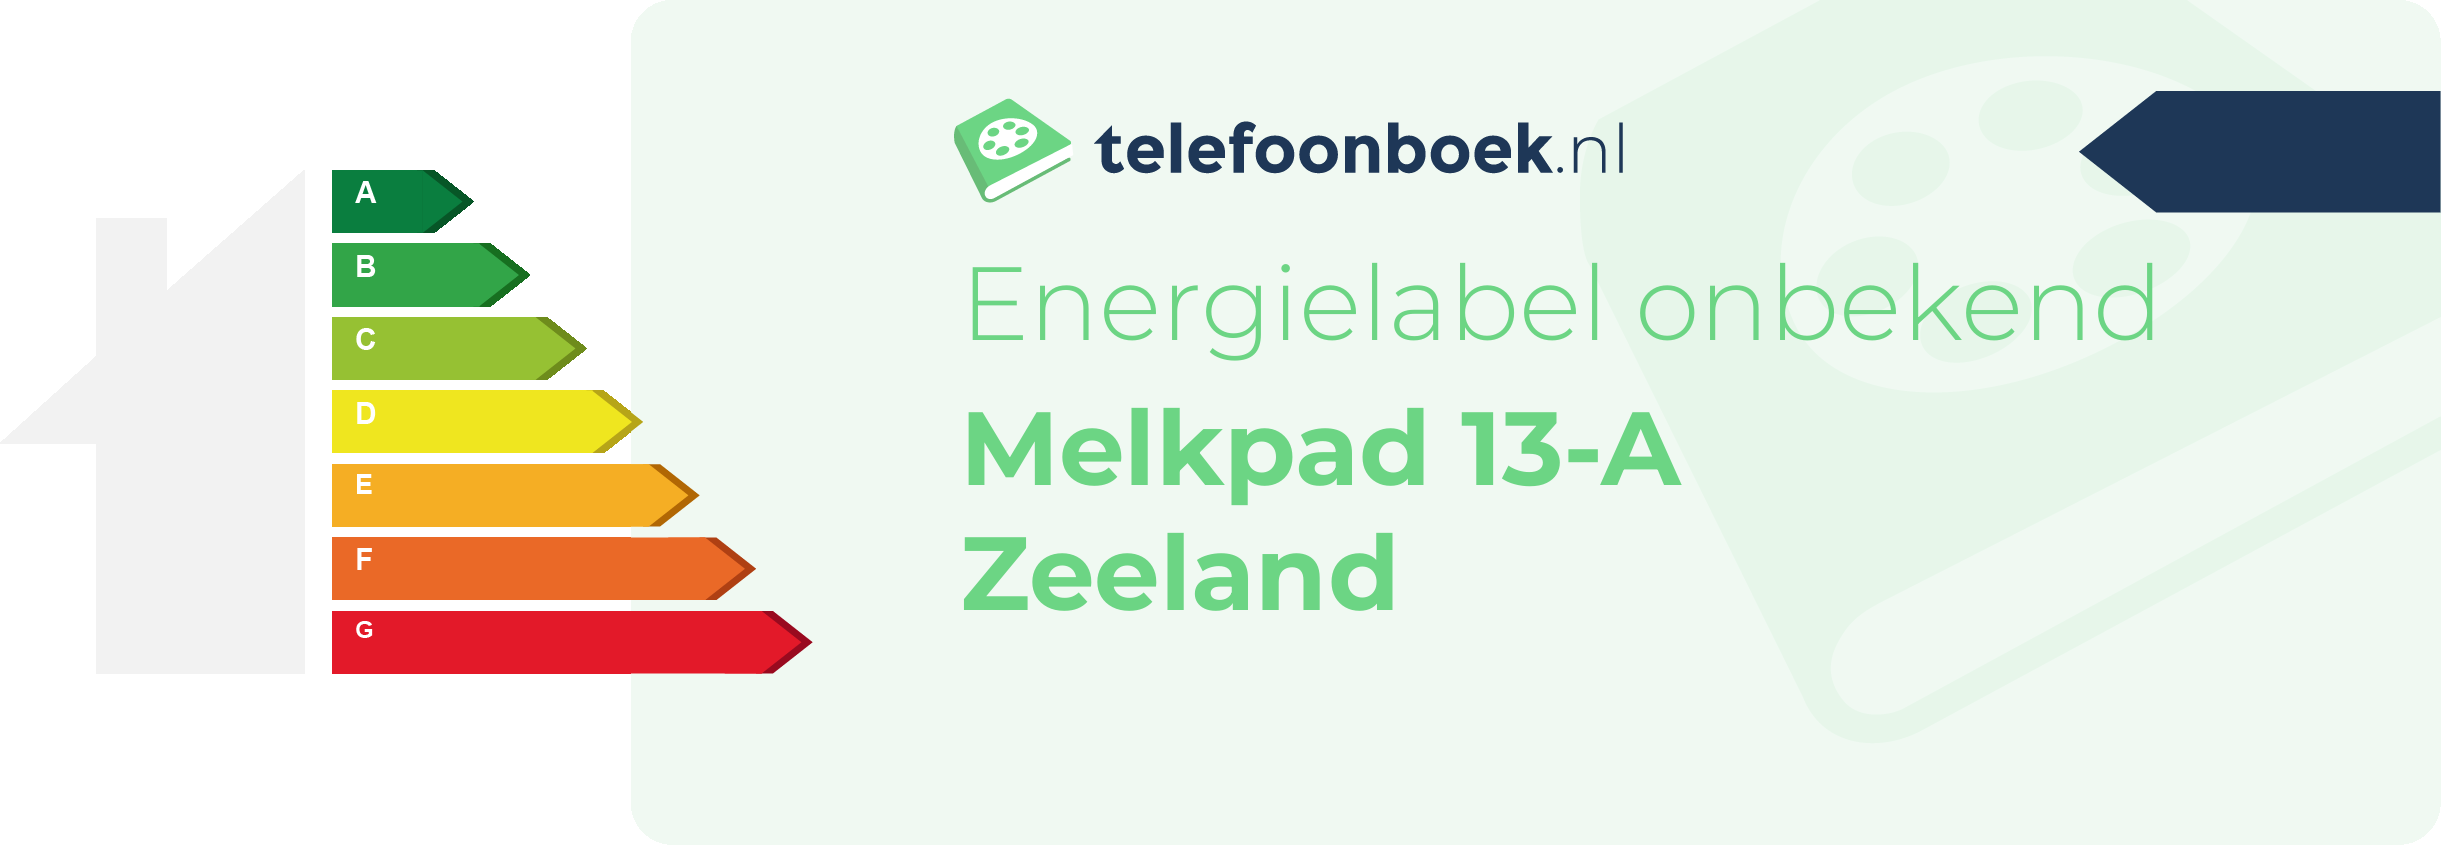 Energielabel Melkpad 13-A Zeeland